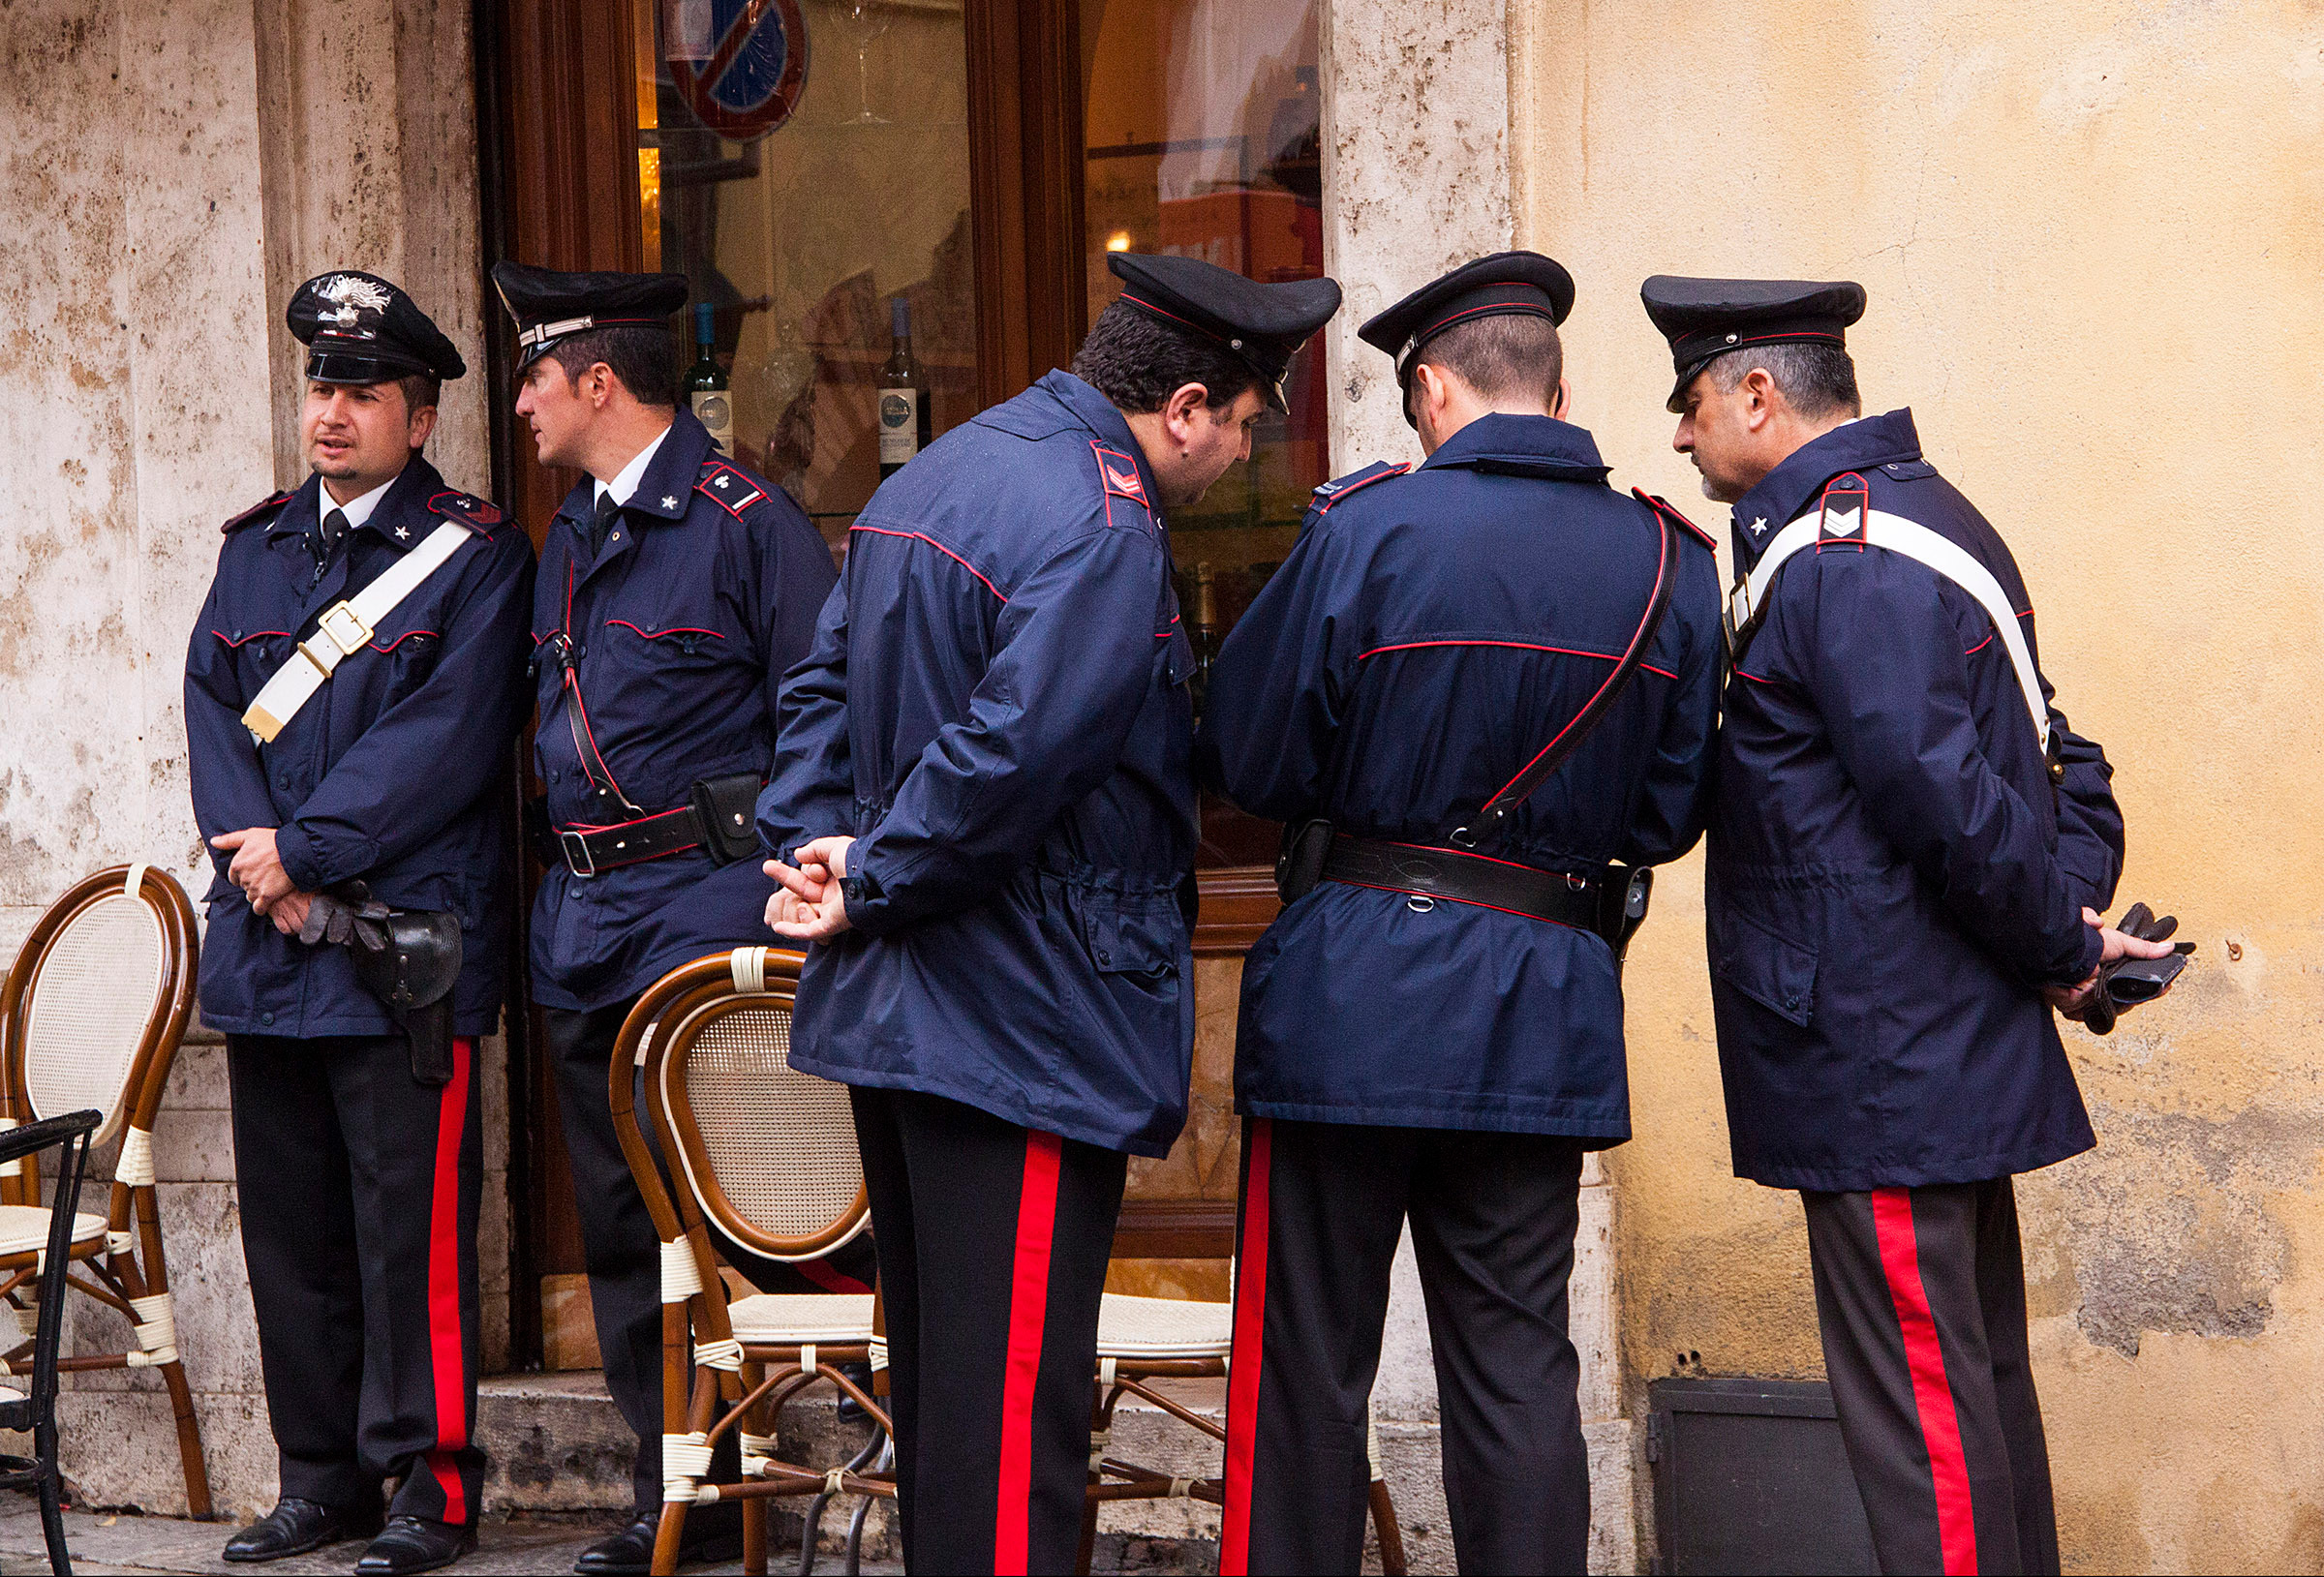 The "carabinieri" of Montalcino